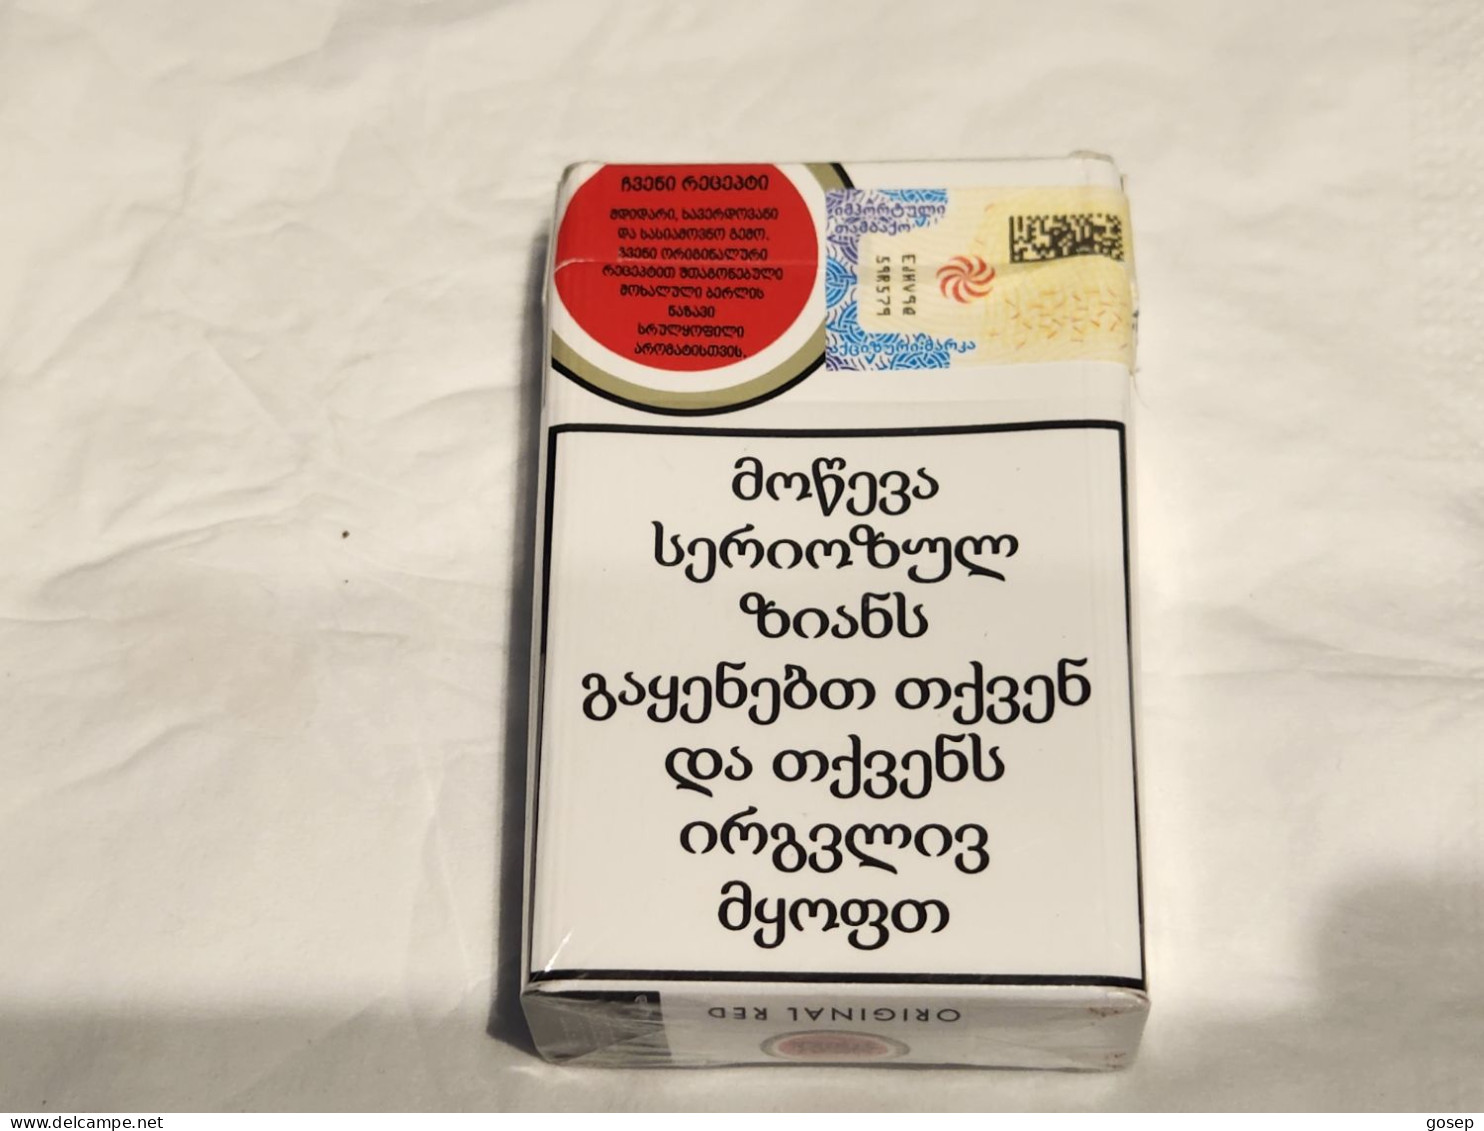 GEORGIA-Boxes--box Empty Cigarette-LUCKY STRIKE-(40)-good Box - Etuis à Cigarettes Vides